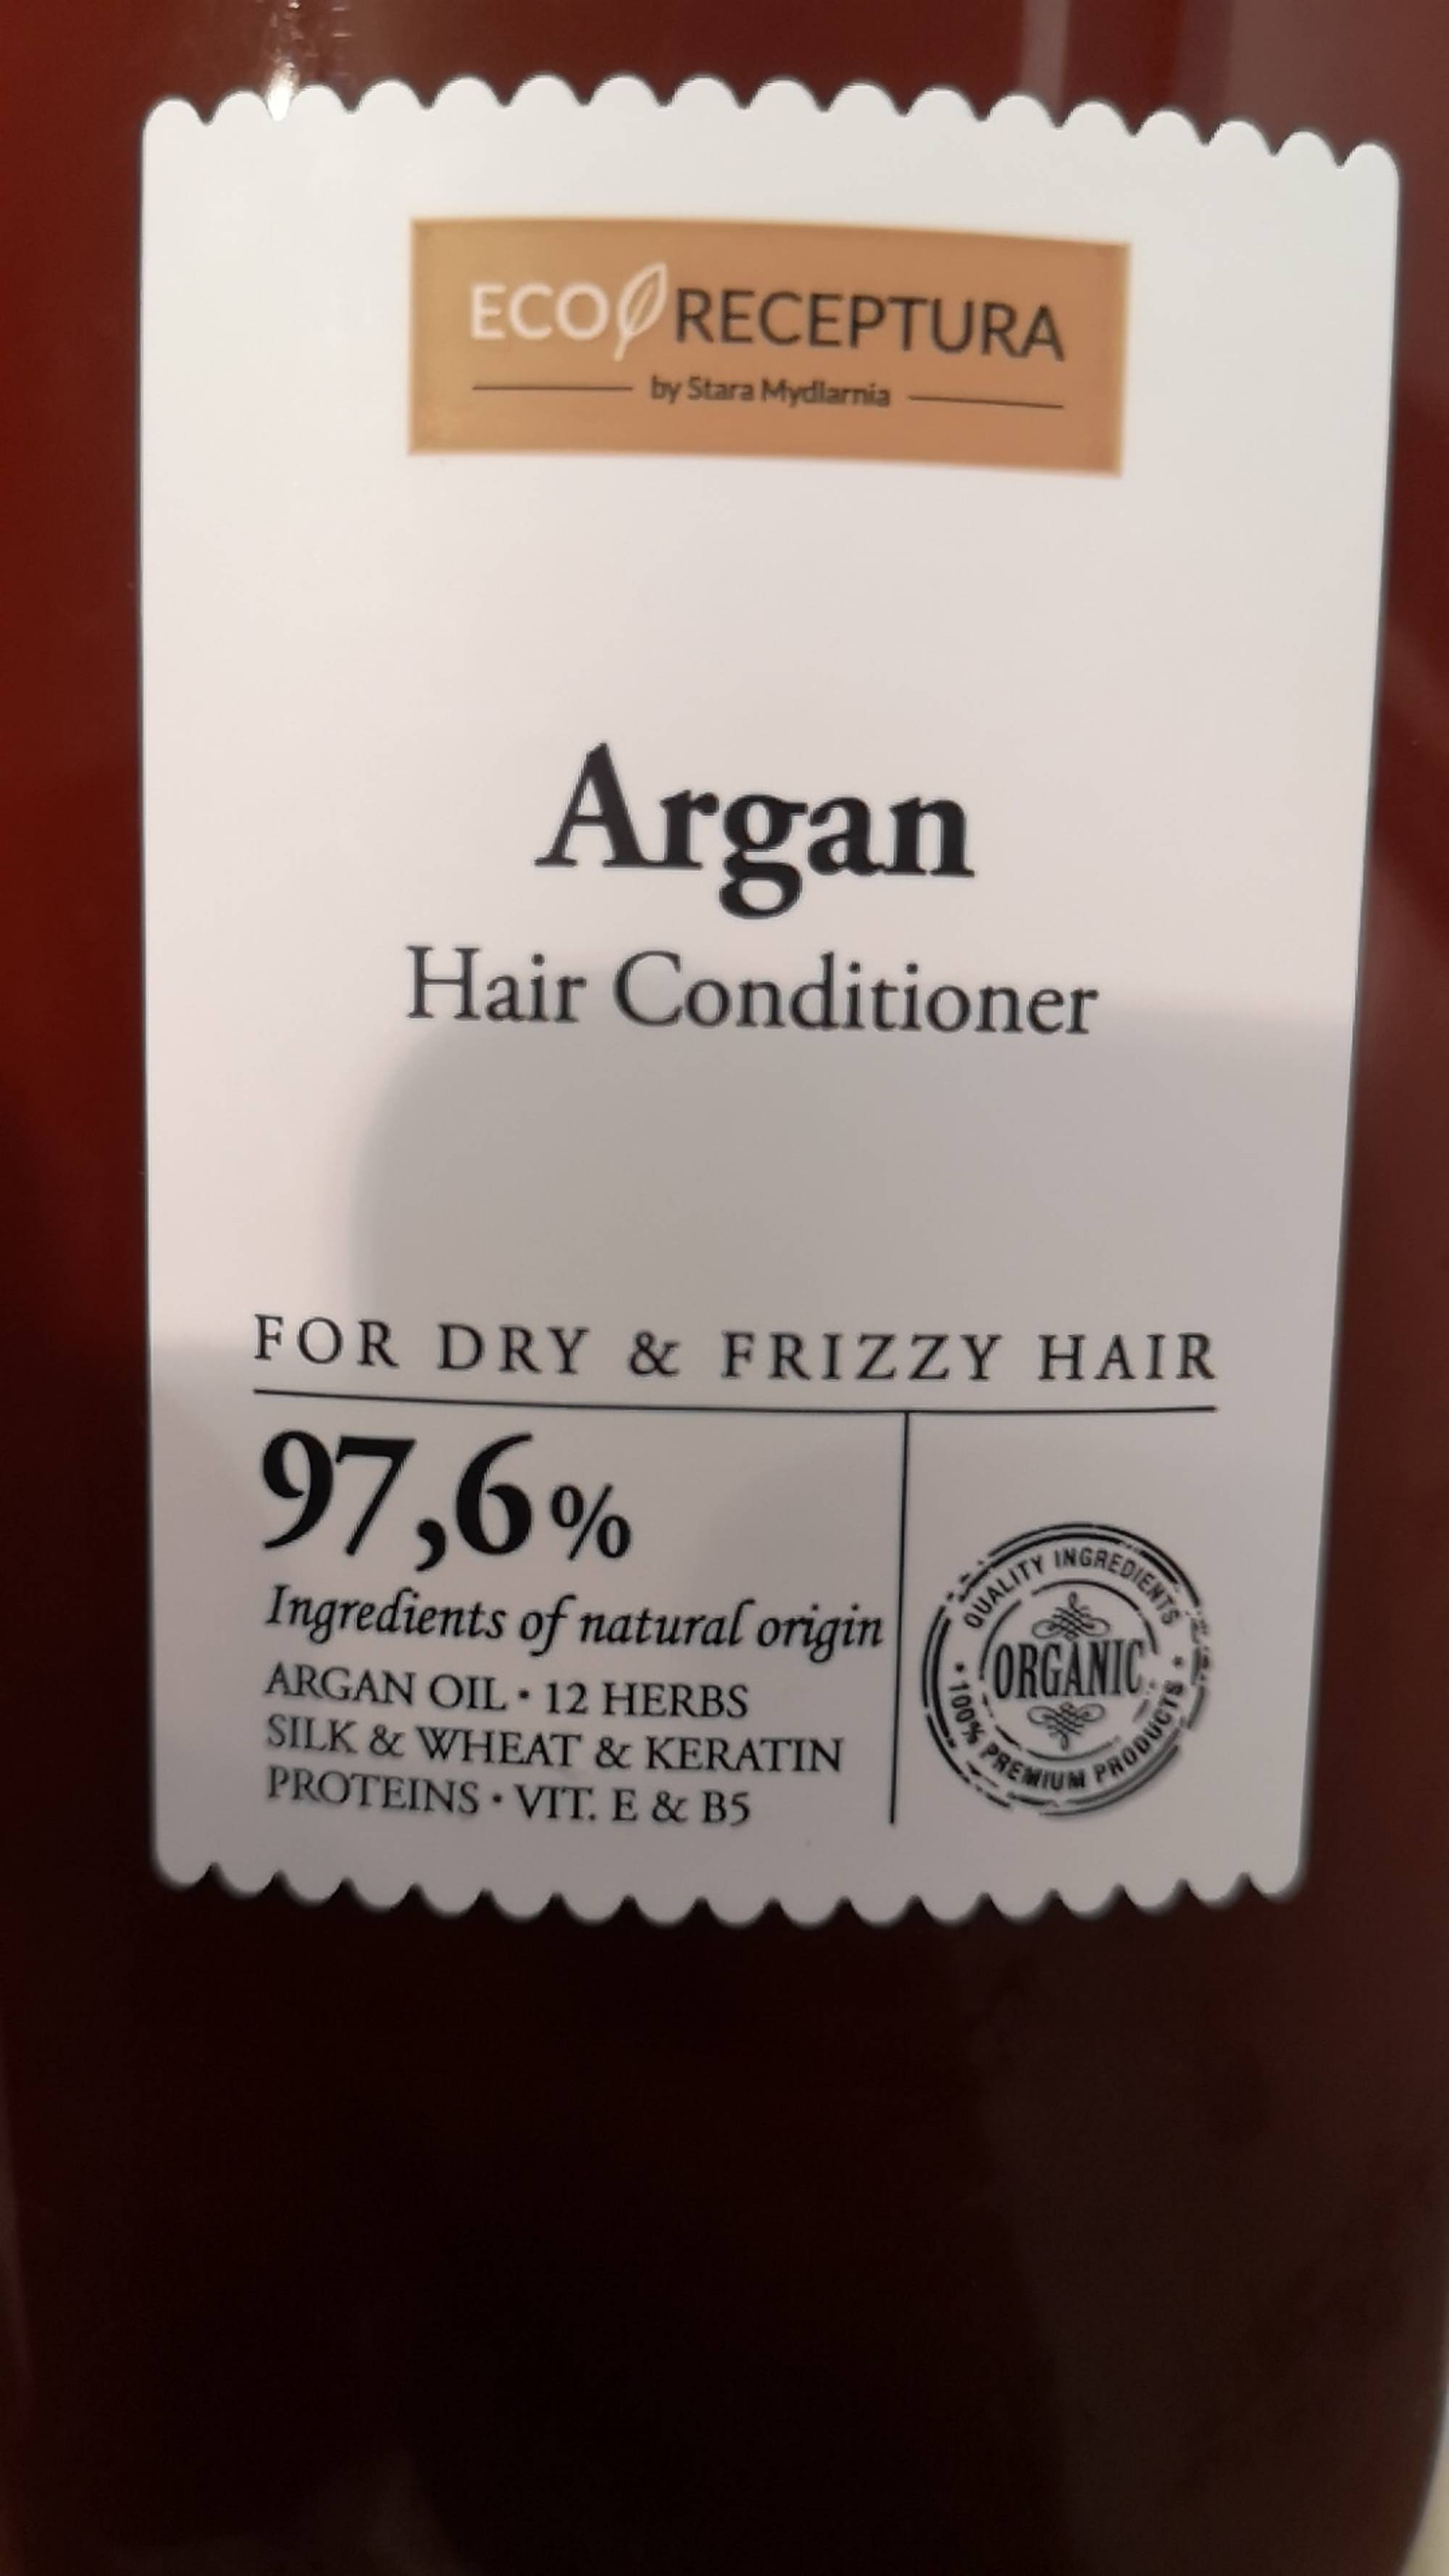 STARA MYDLARNIA - Argan - Hair conditioner